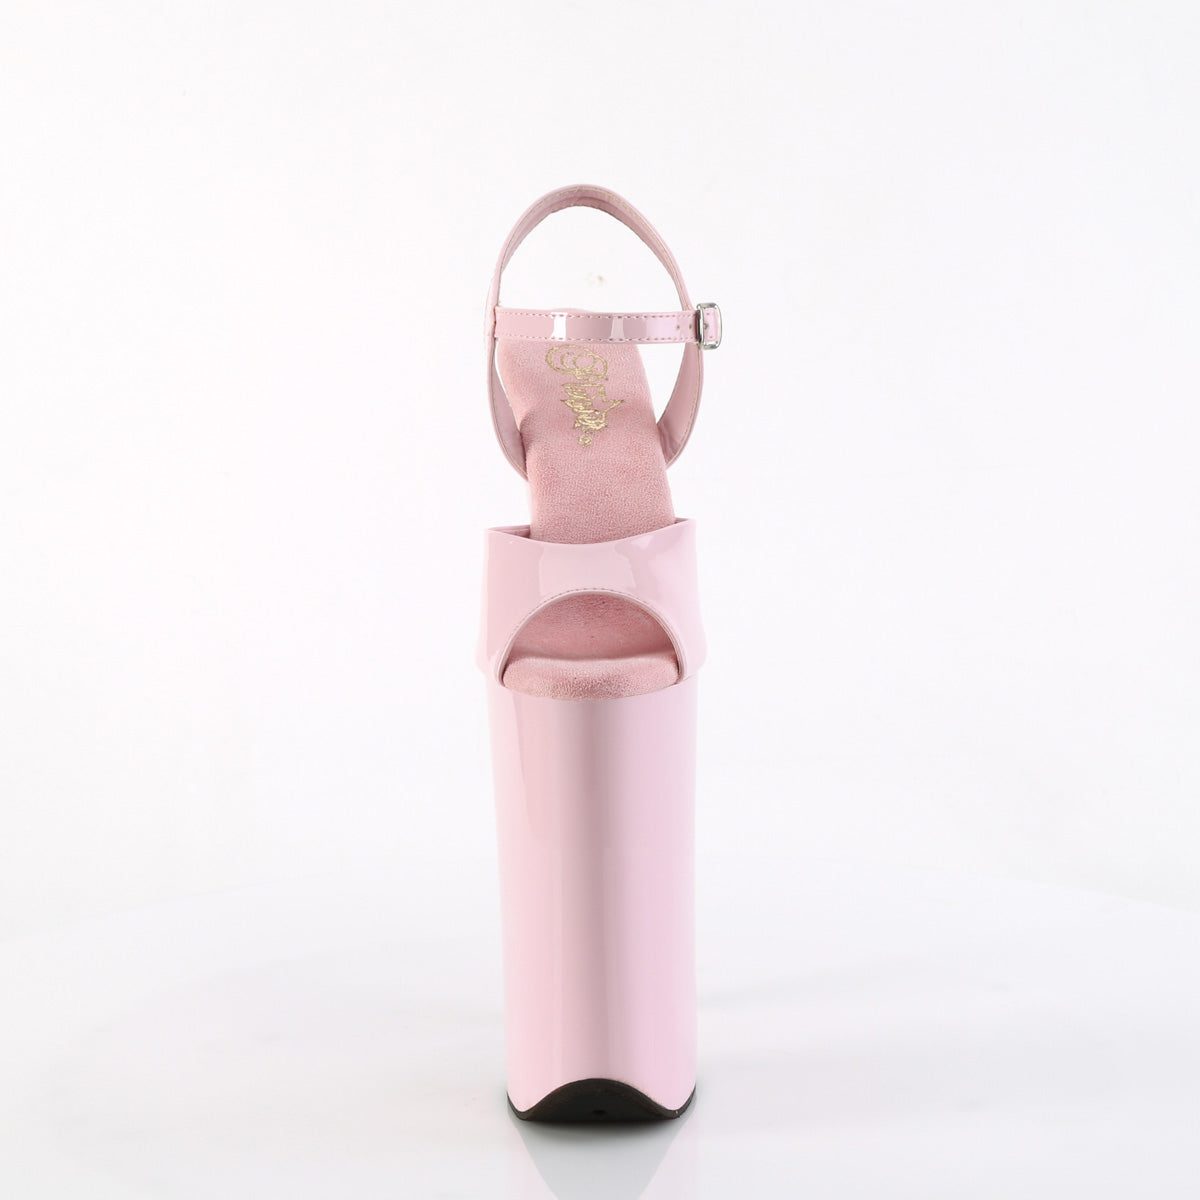 Pleaser  Sandals BEYOND-009 B. Pink Pat/B. Pink